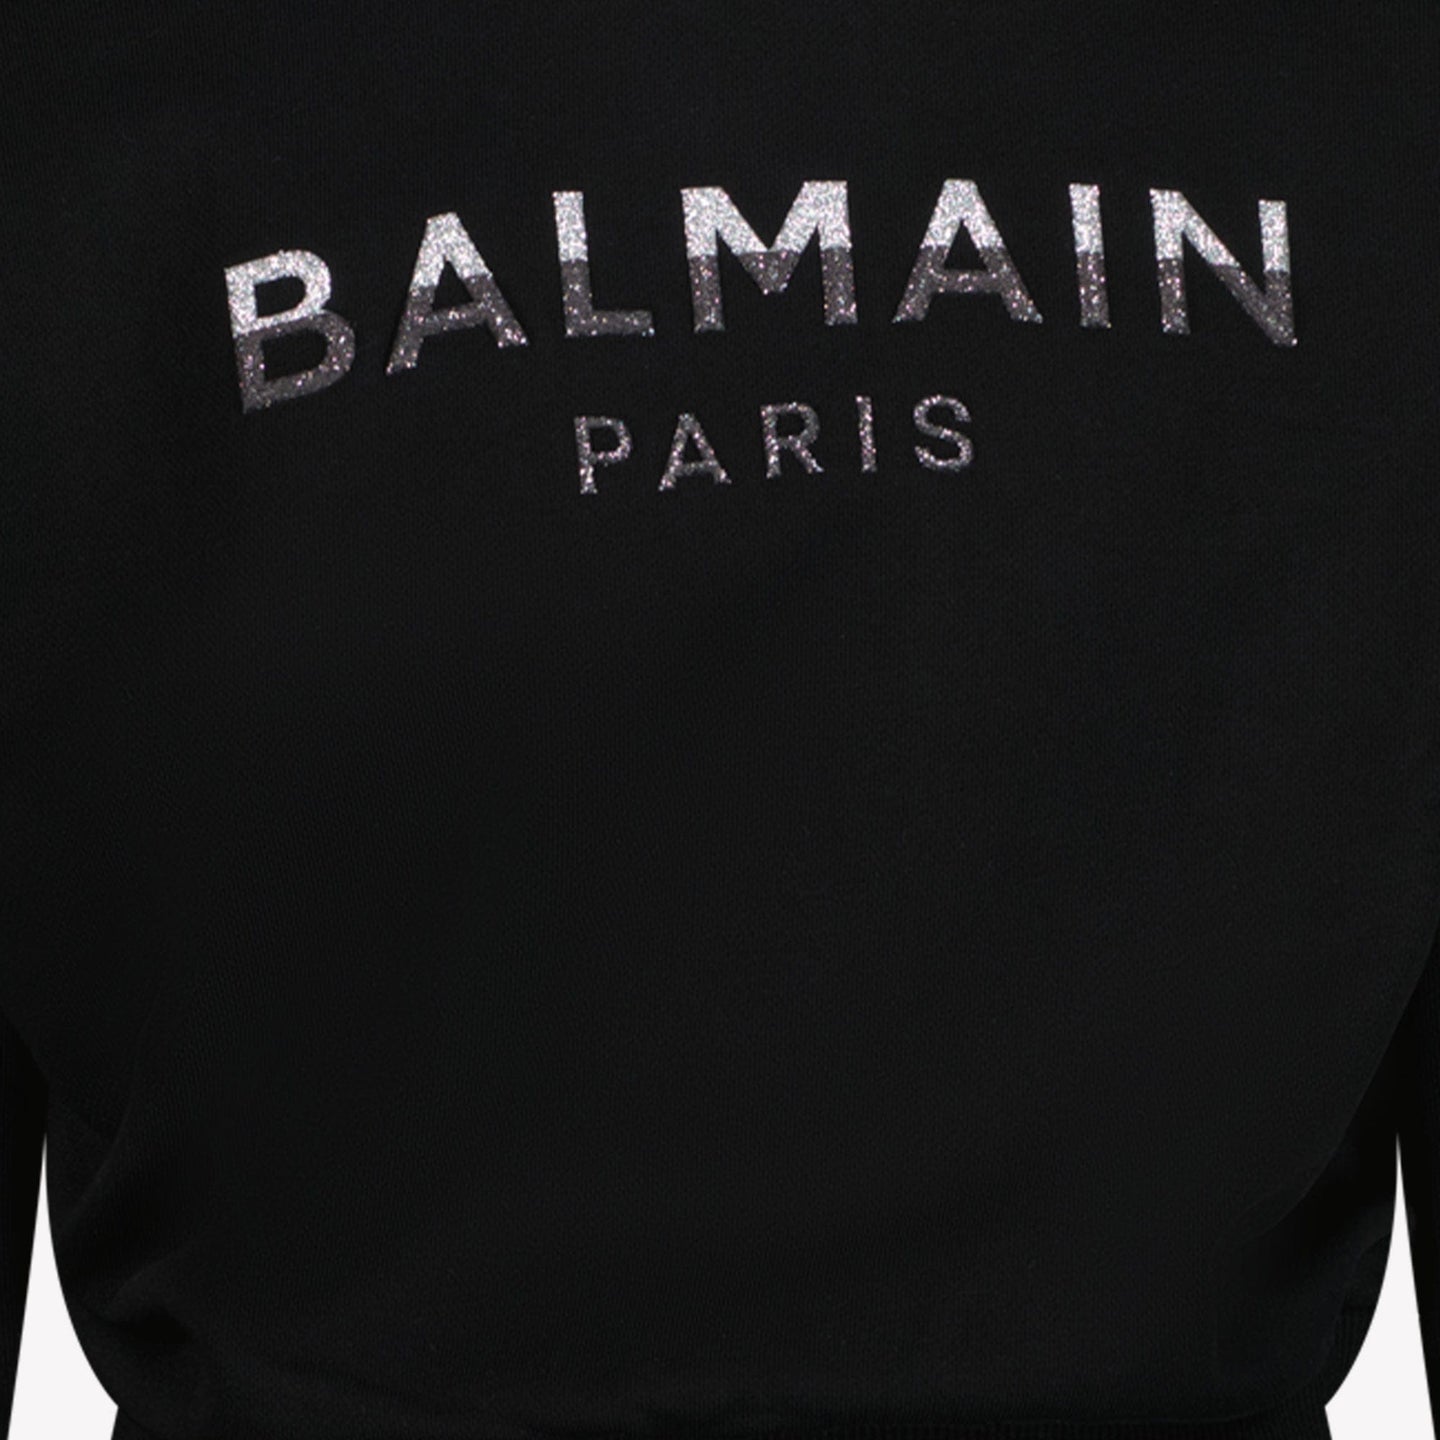 Balmain Girls sweater Black